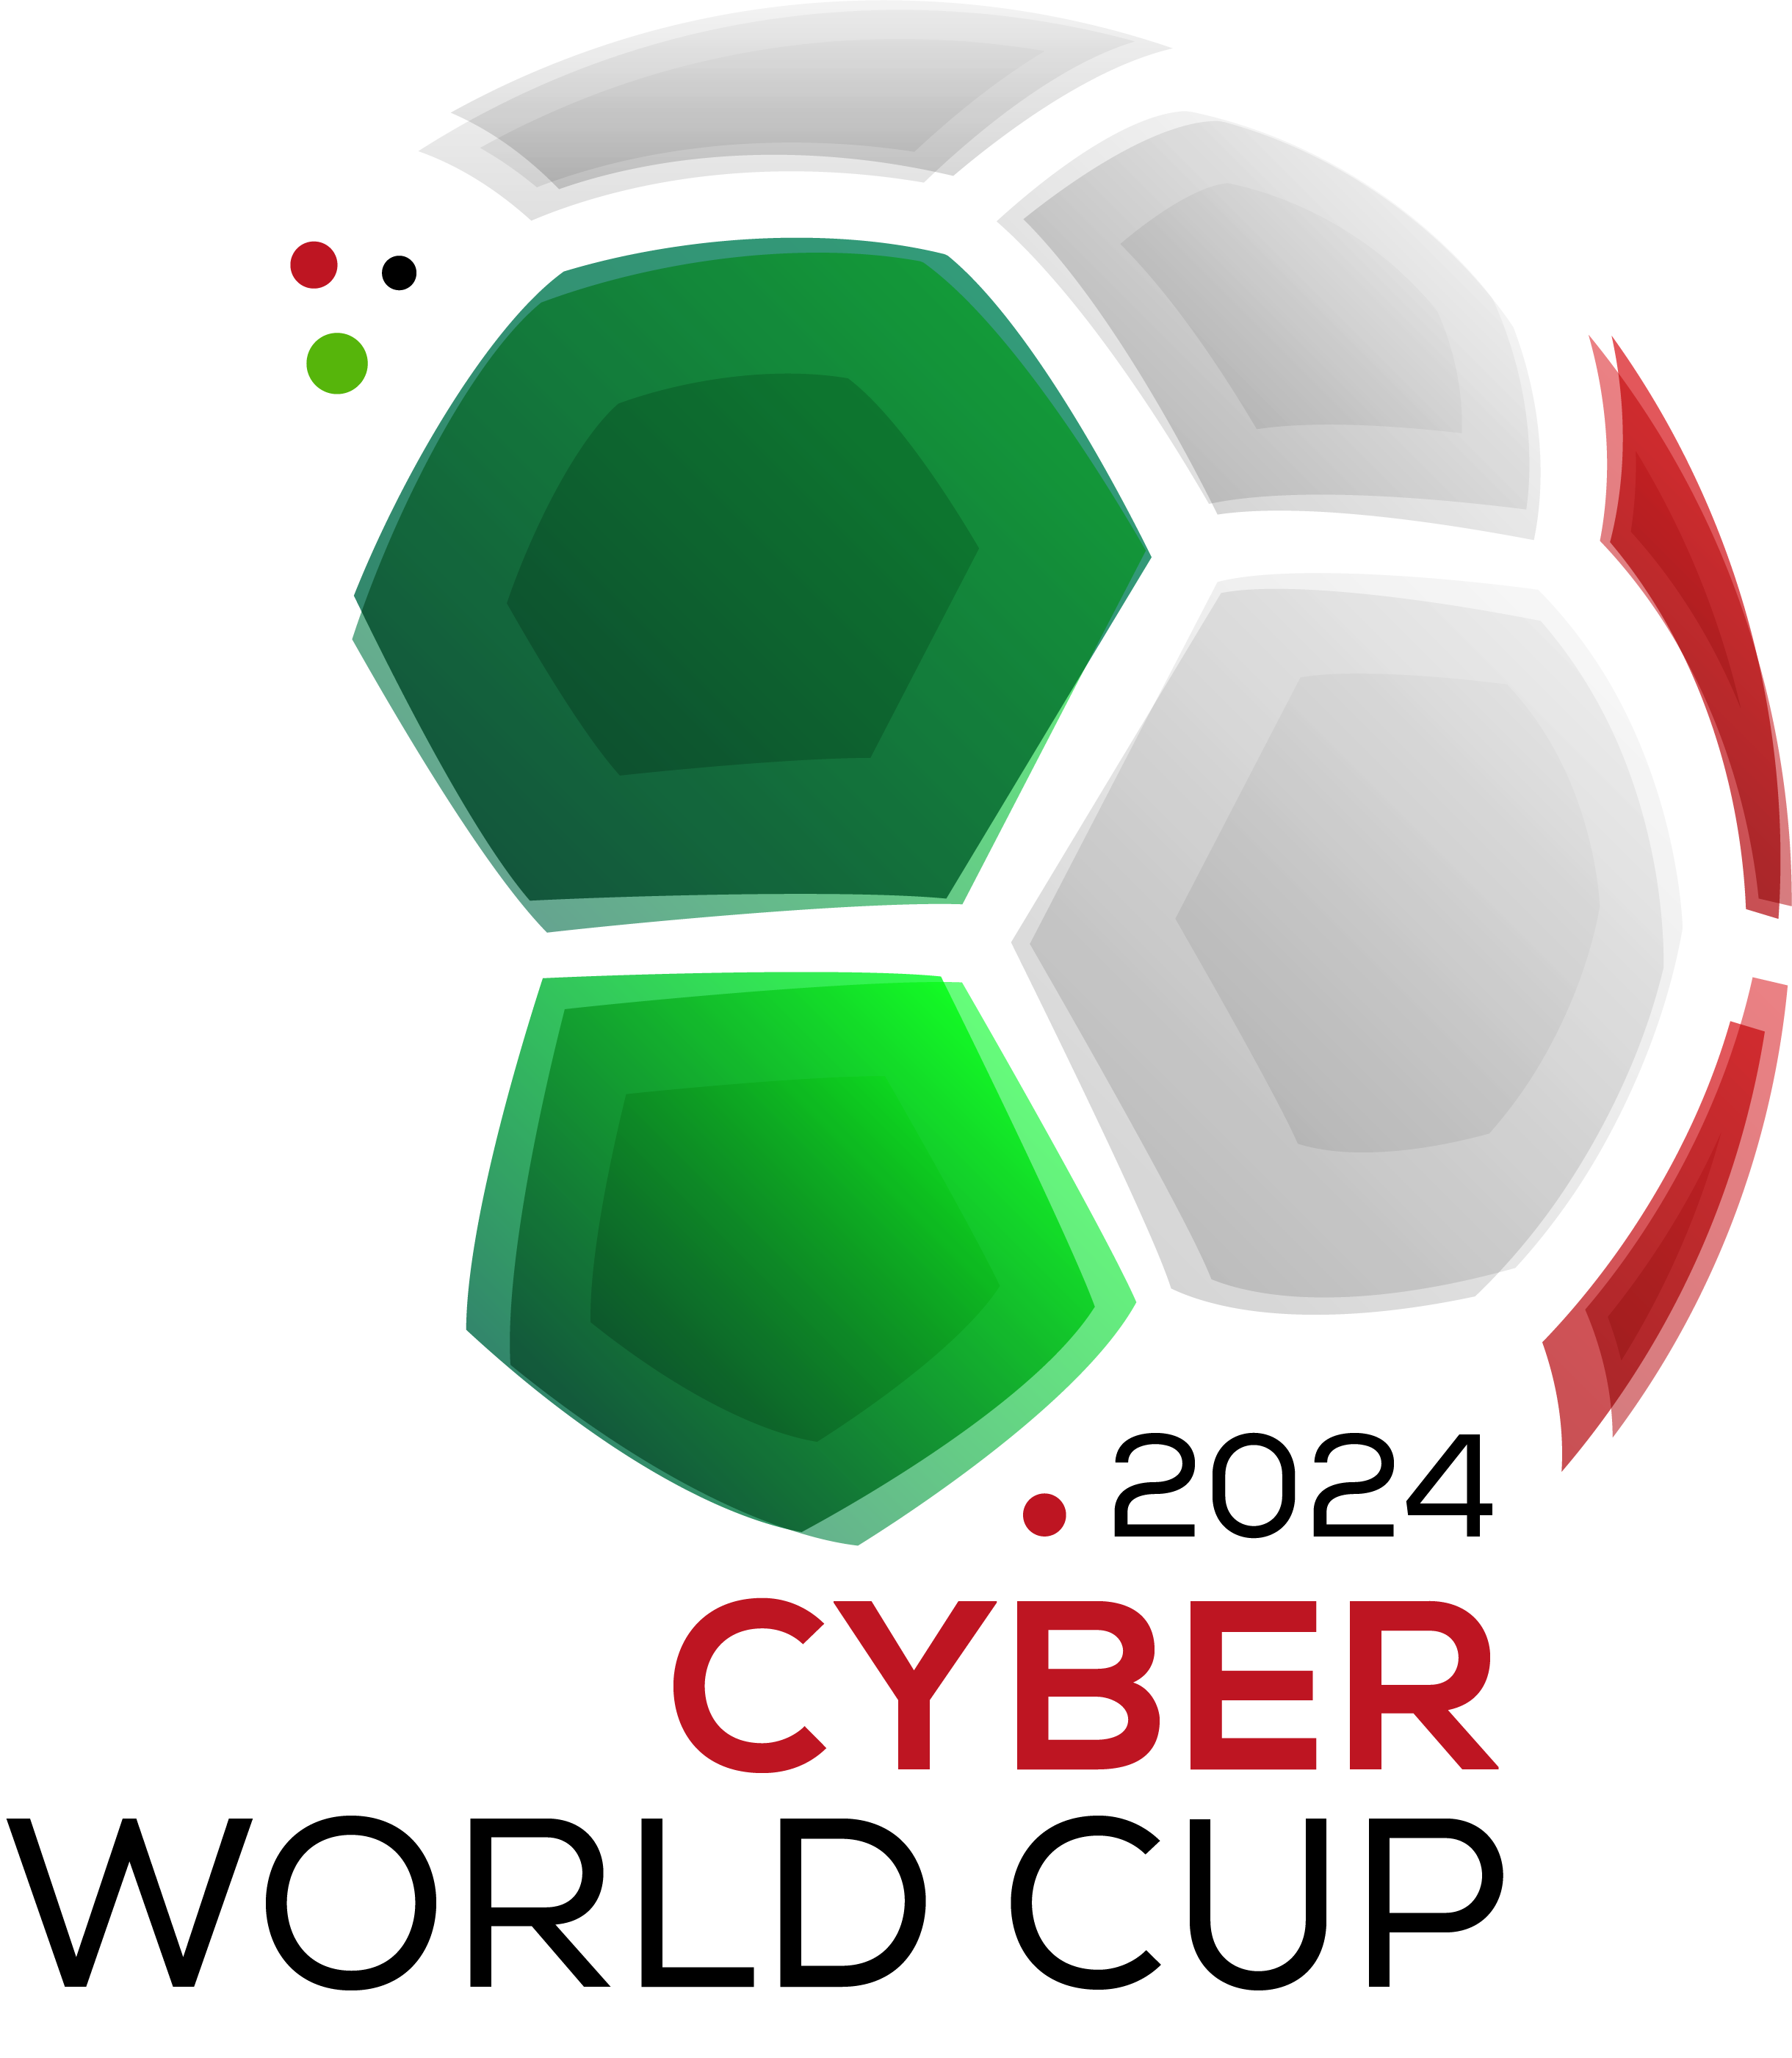 cyber world cup logo 2